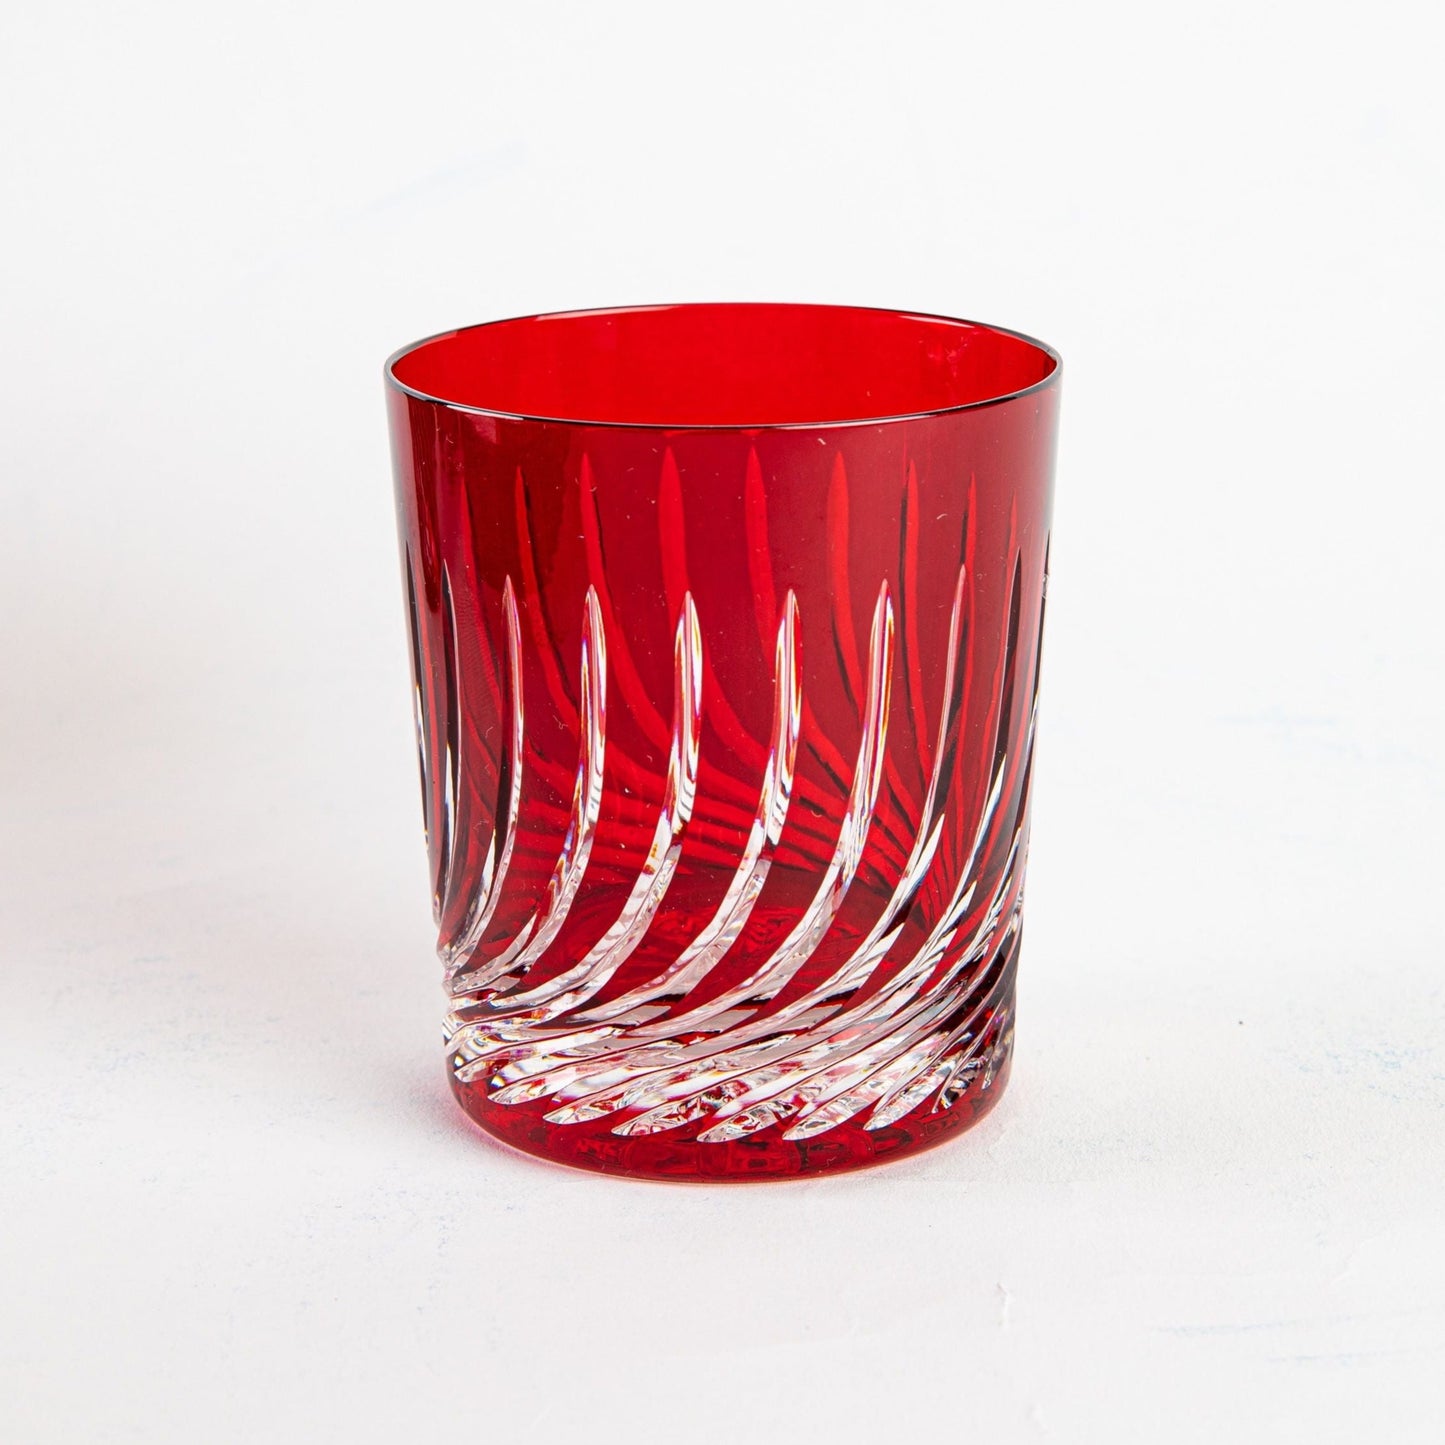 Ogien Crystal Tumblers - Set of 2 in Red